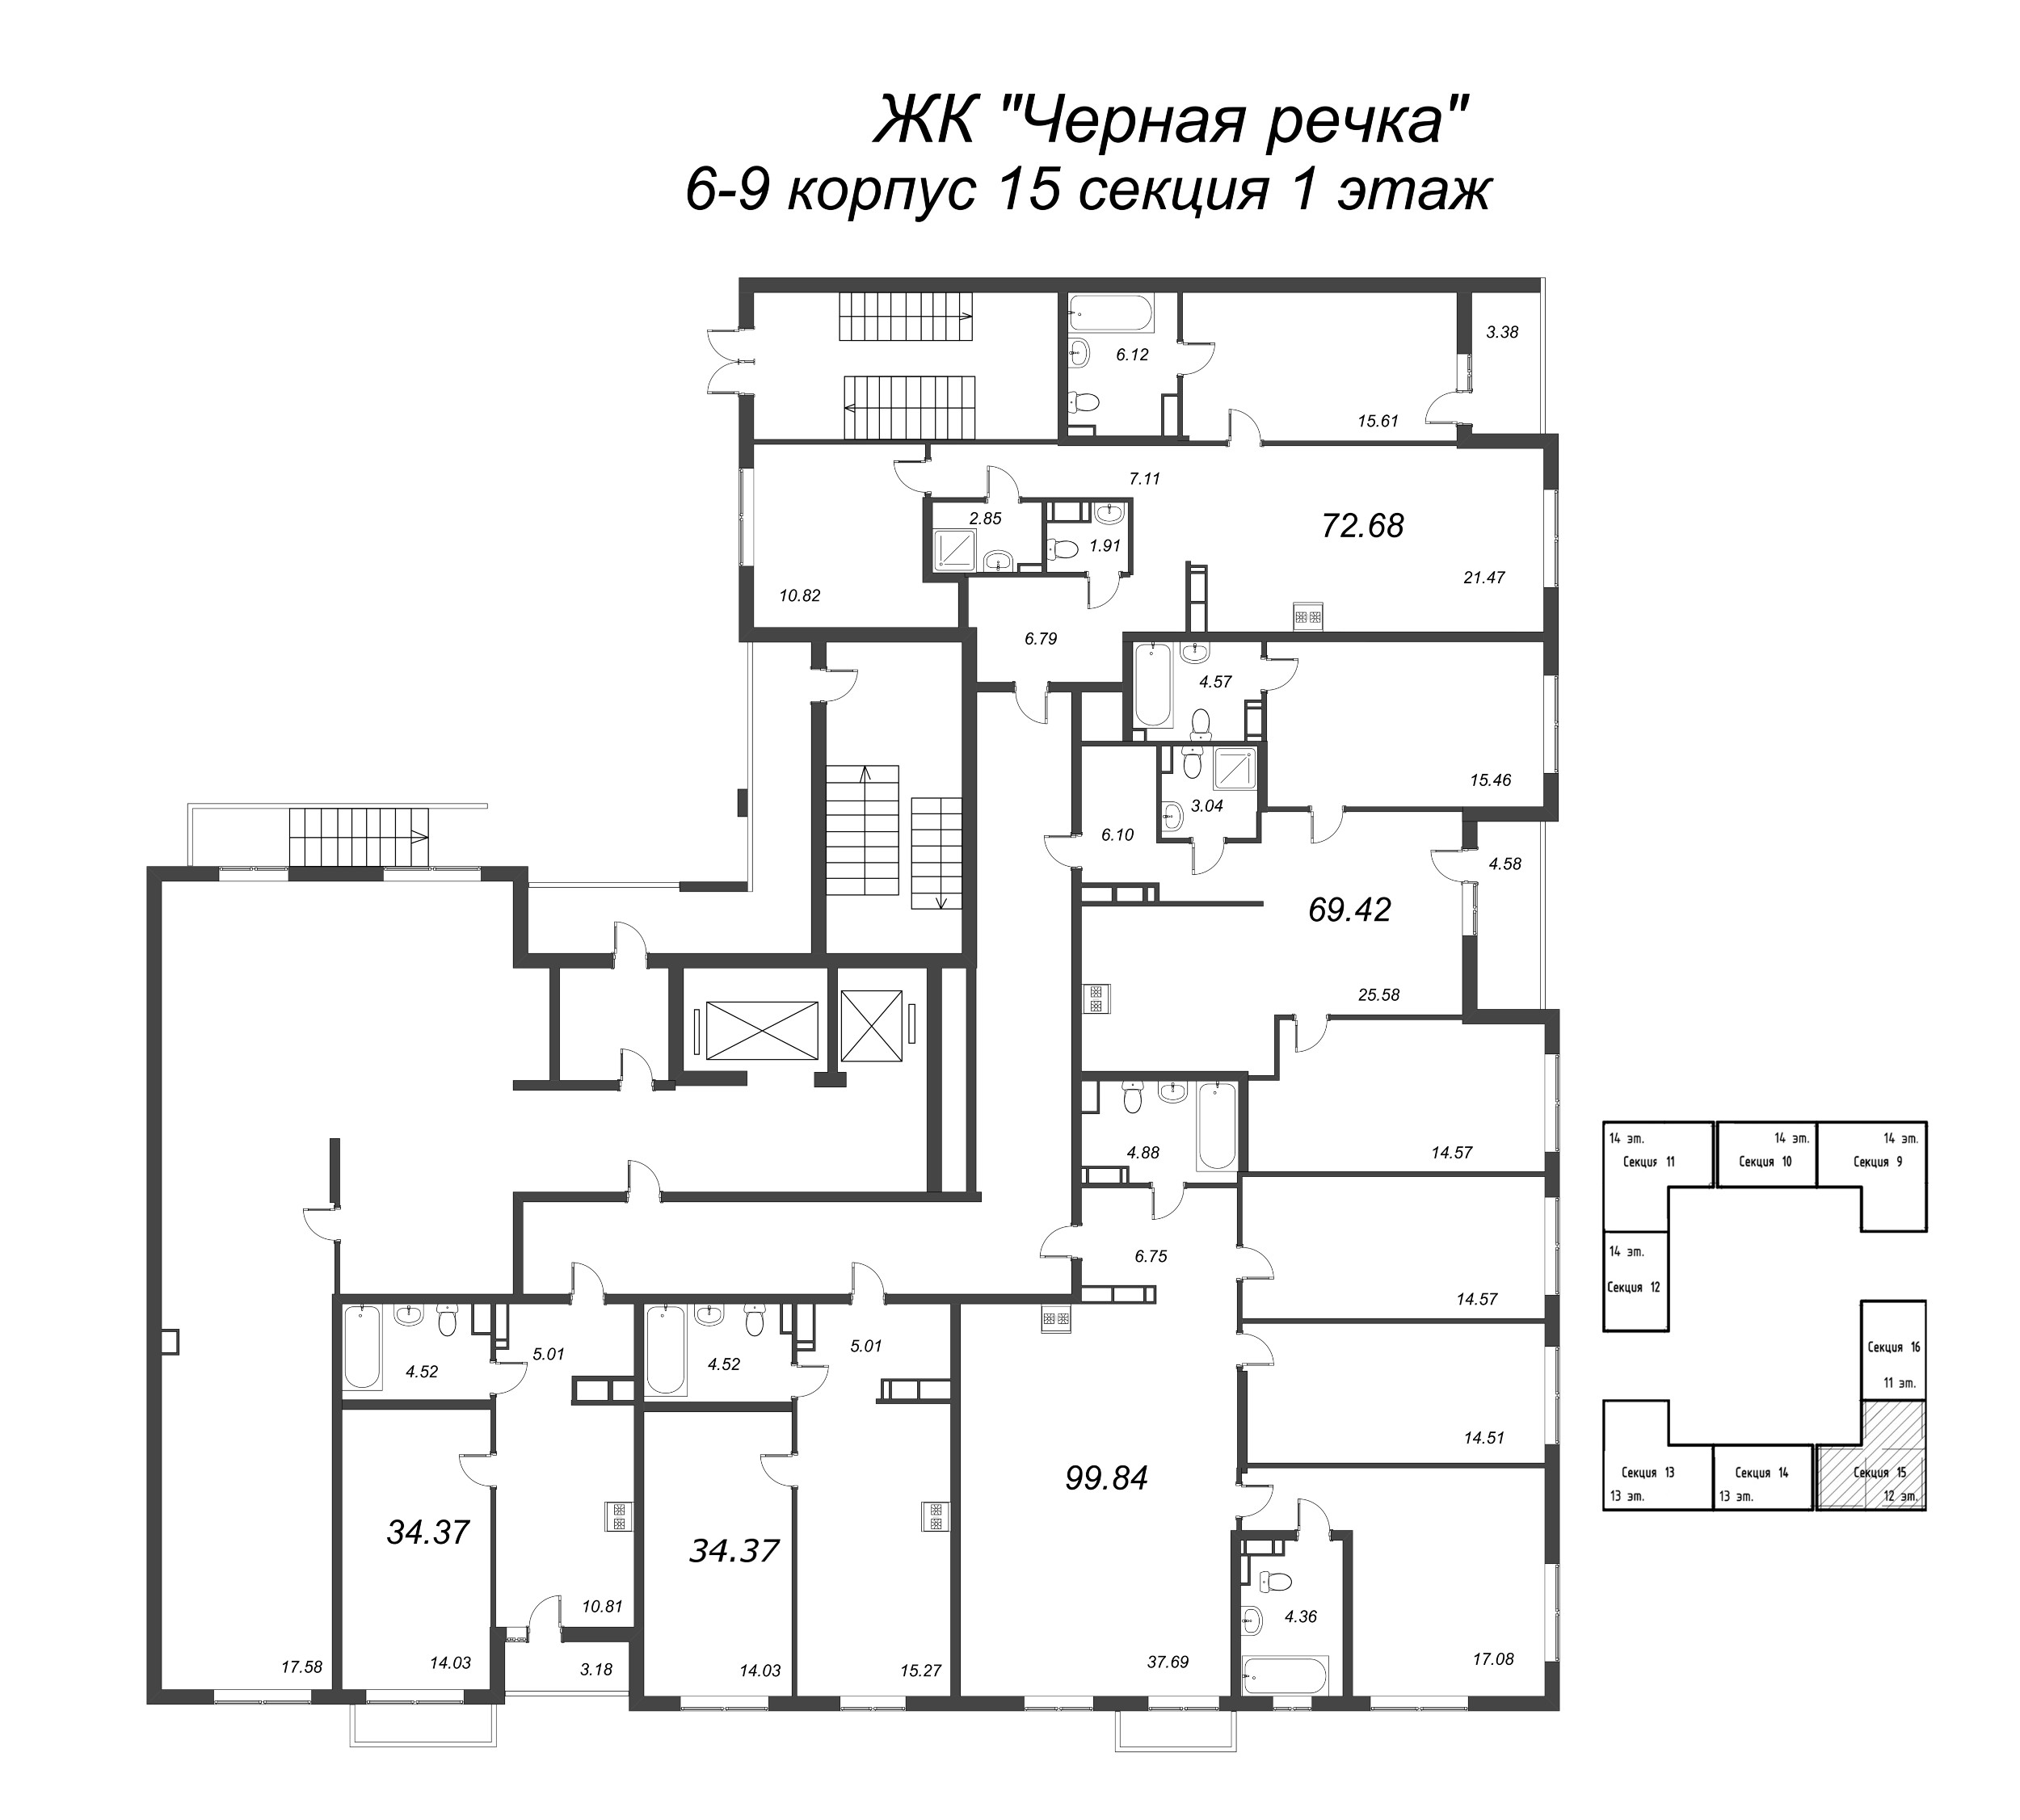 2-комнатная (Евро) квартира, 38.83 м² в ЖК "Чёрная речка от Ильича" - планировка этажа